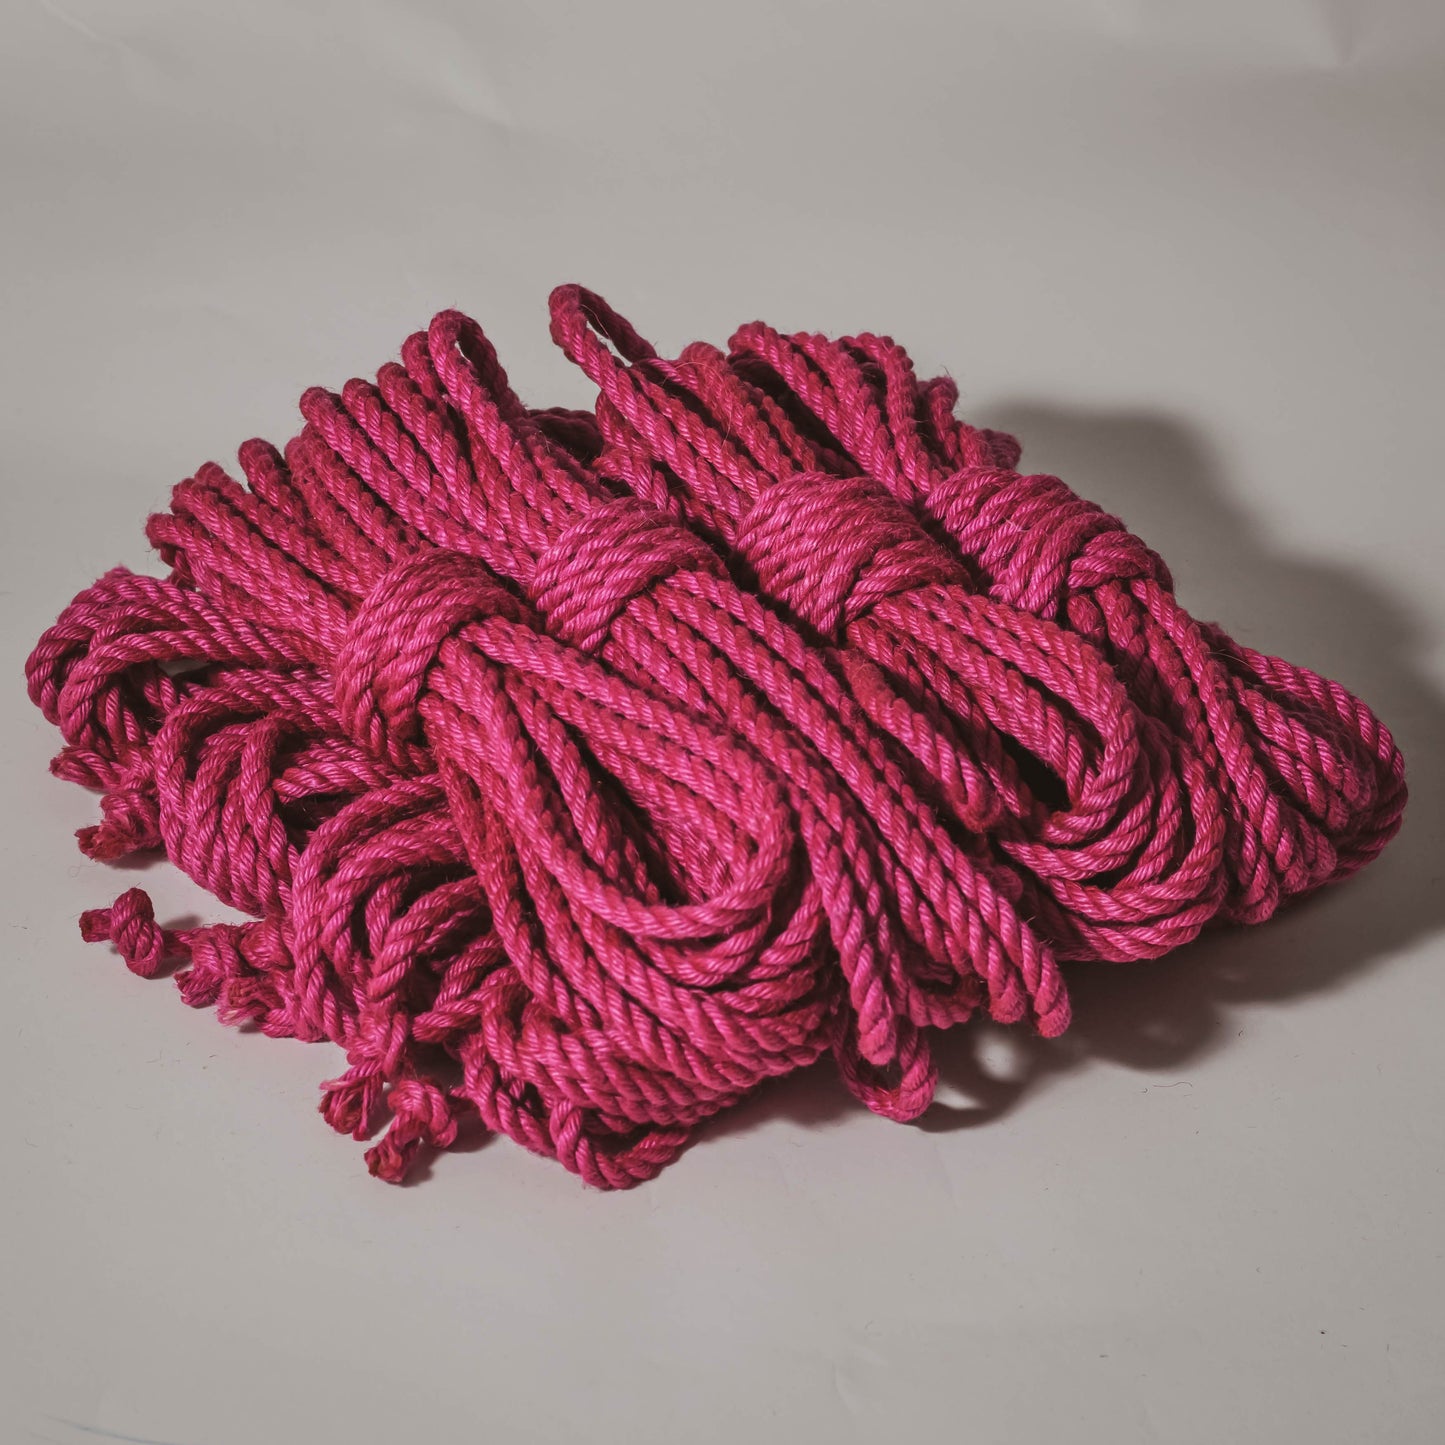 Pink jute rope (treated, 6mm) Shibari Rope Bundle of 8 